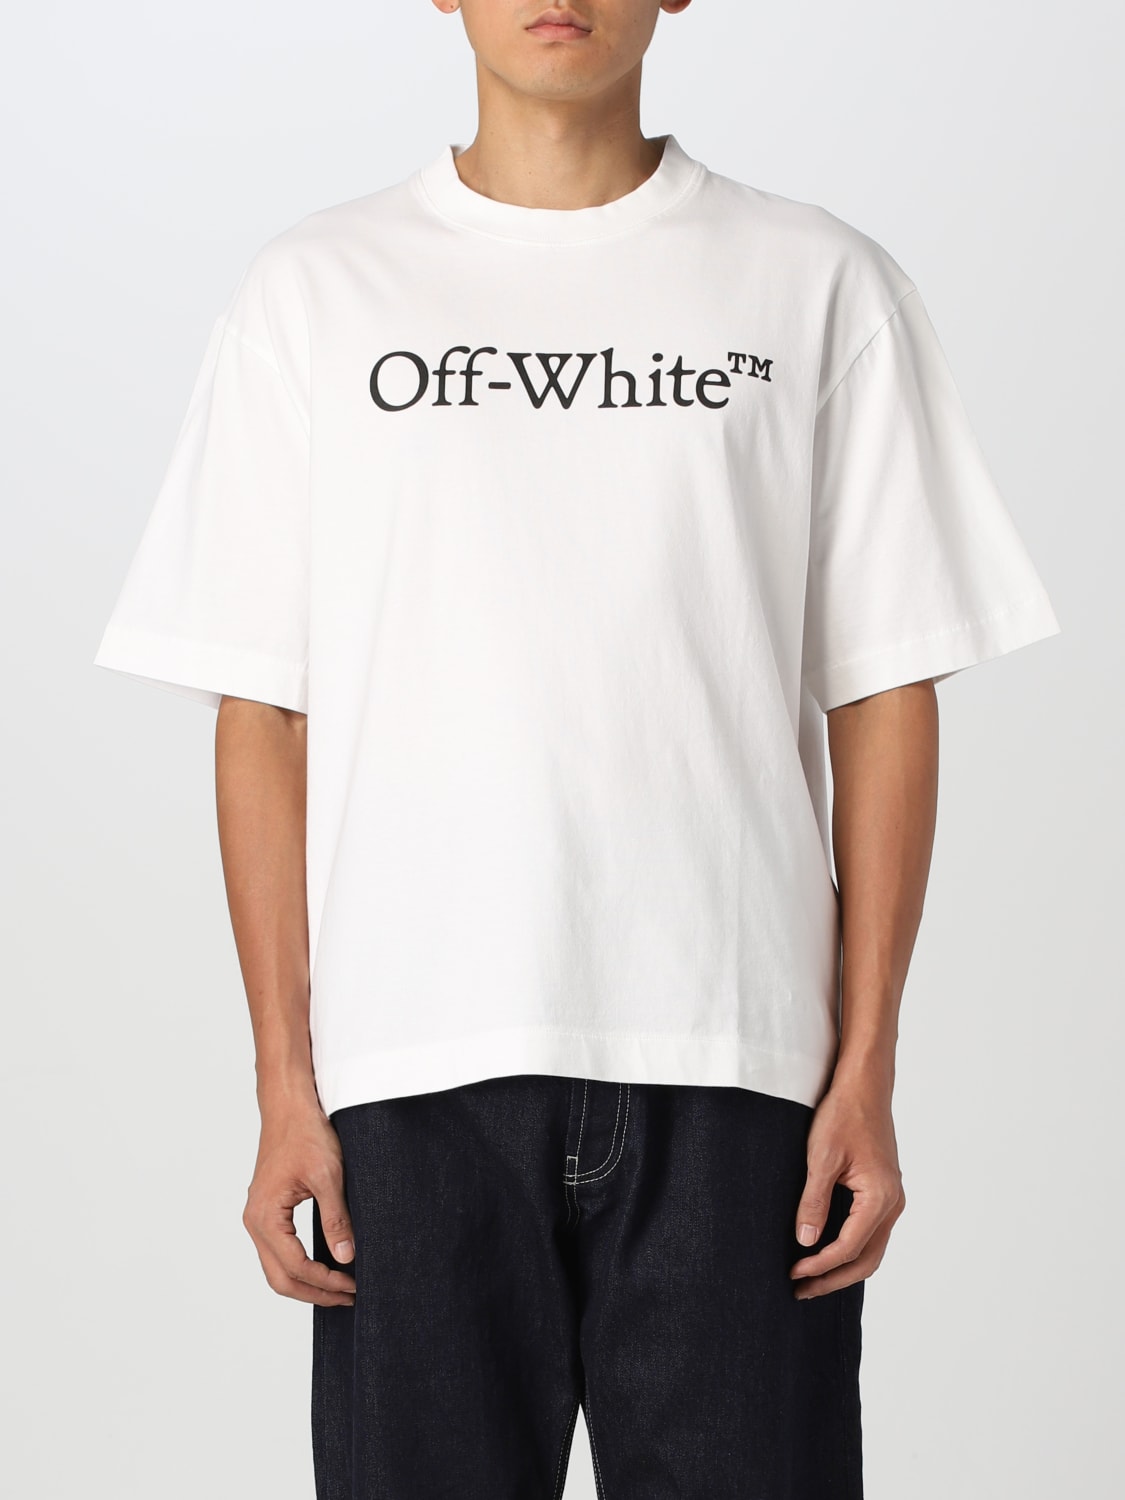 off-white  tee tシャツ